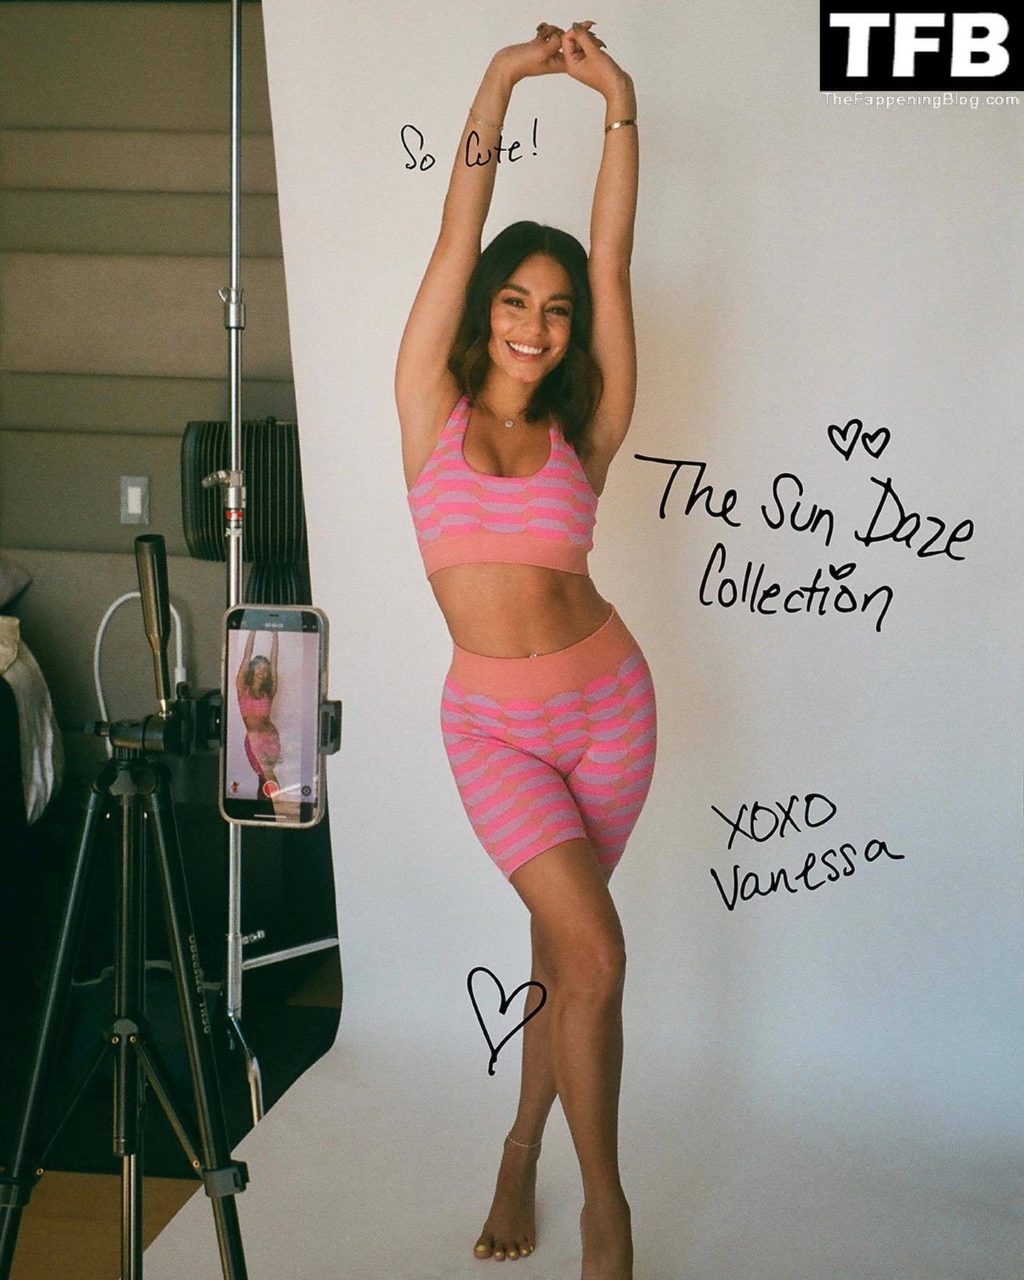 Vanessa Hudgens Promotes a New Fabletics “The Sun Daze” Collection (5 Photos)